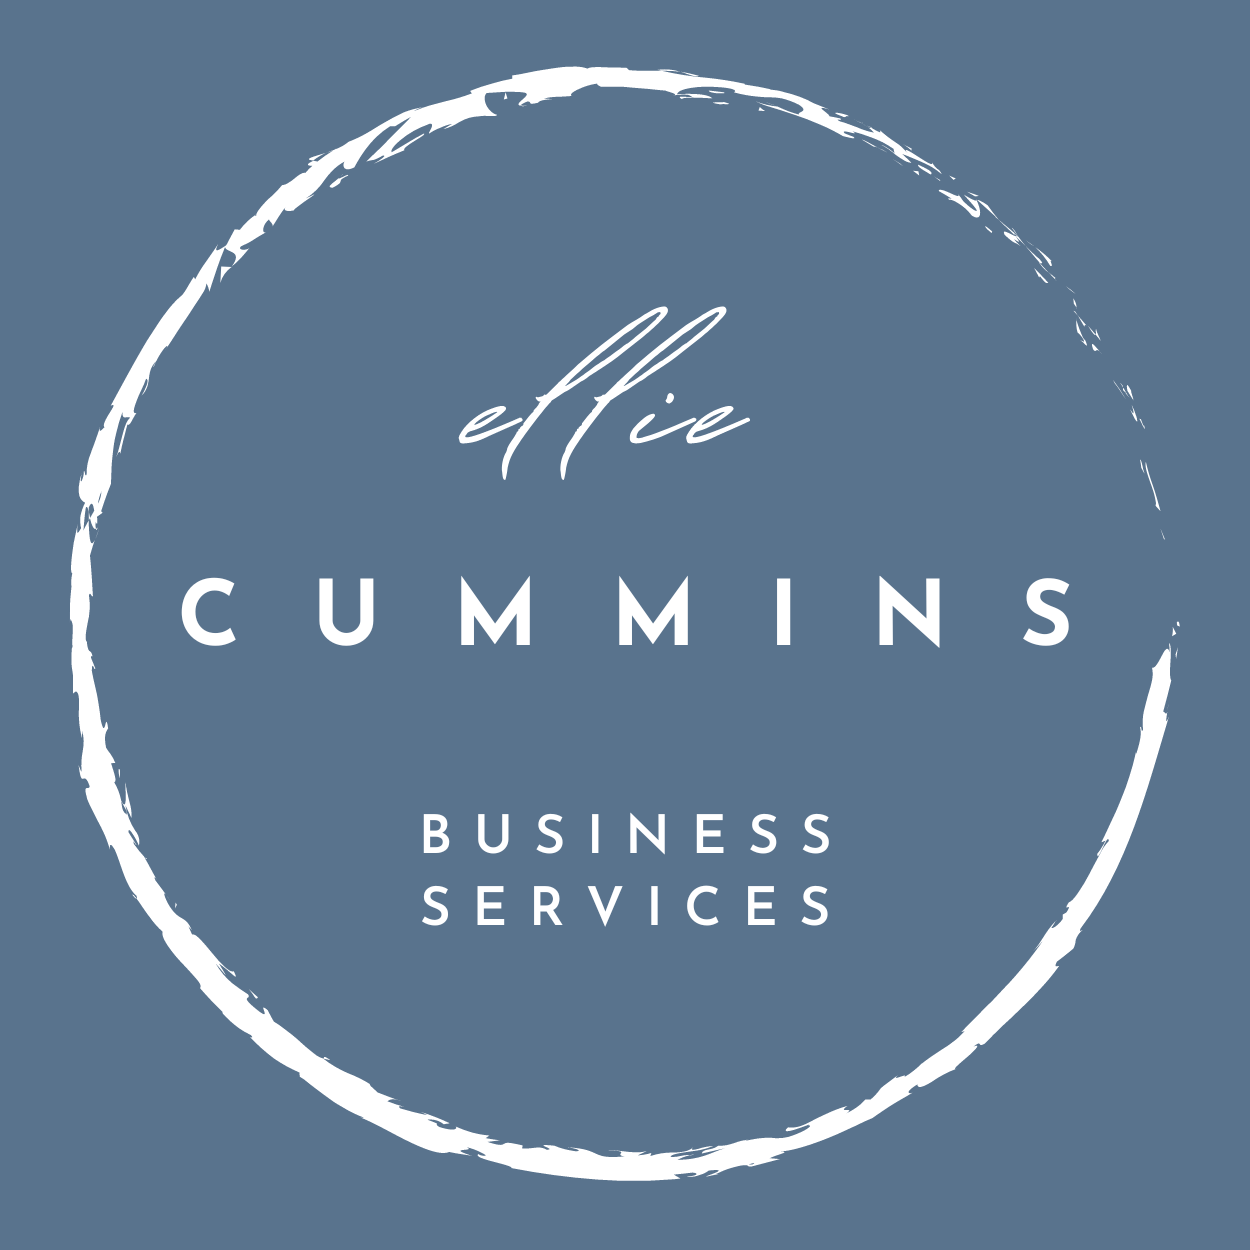 Ellie Cummins Business Services